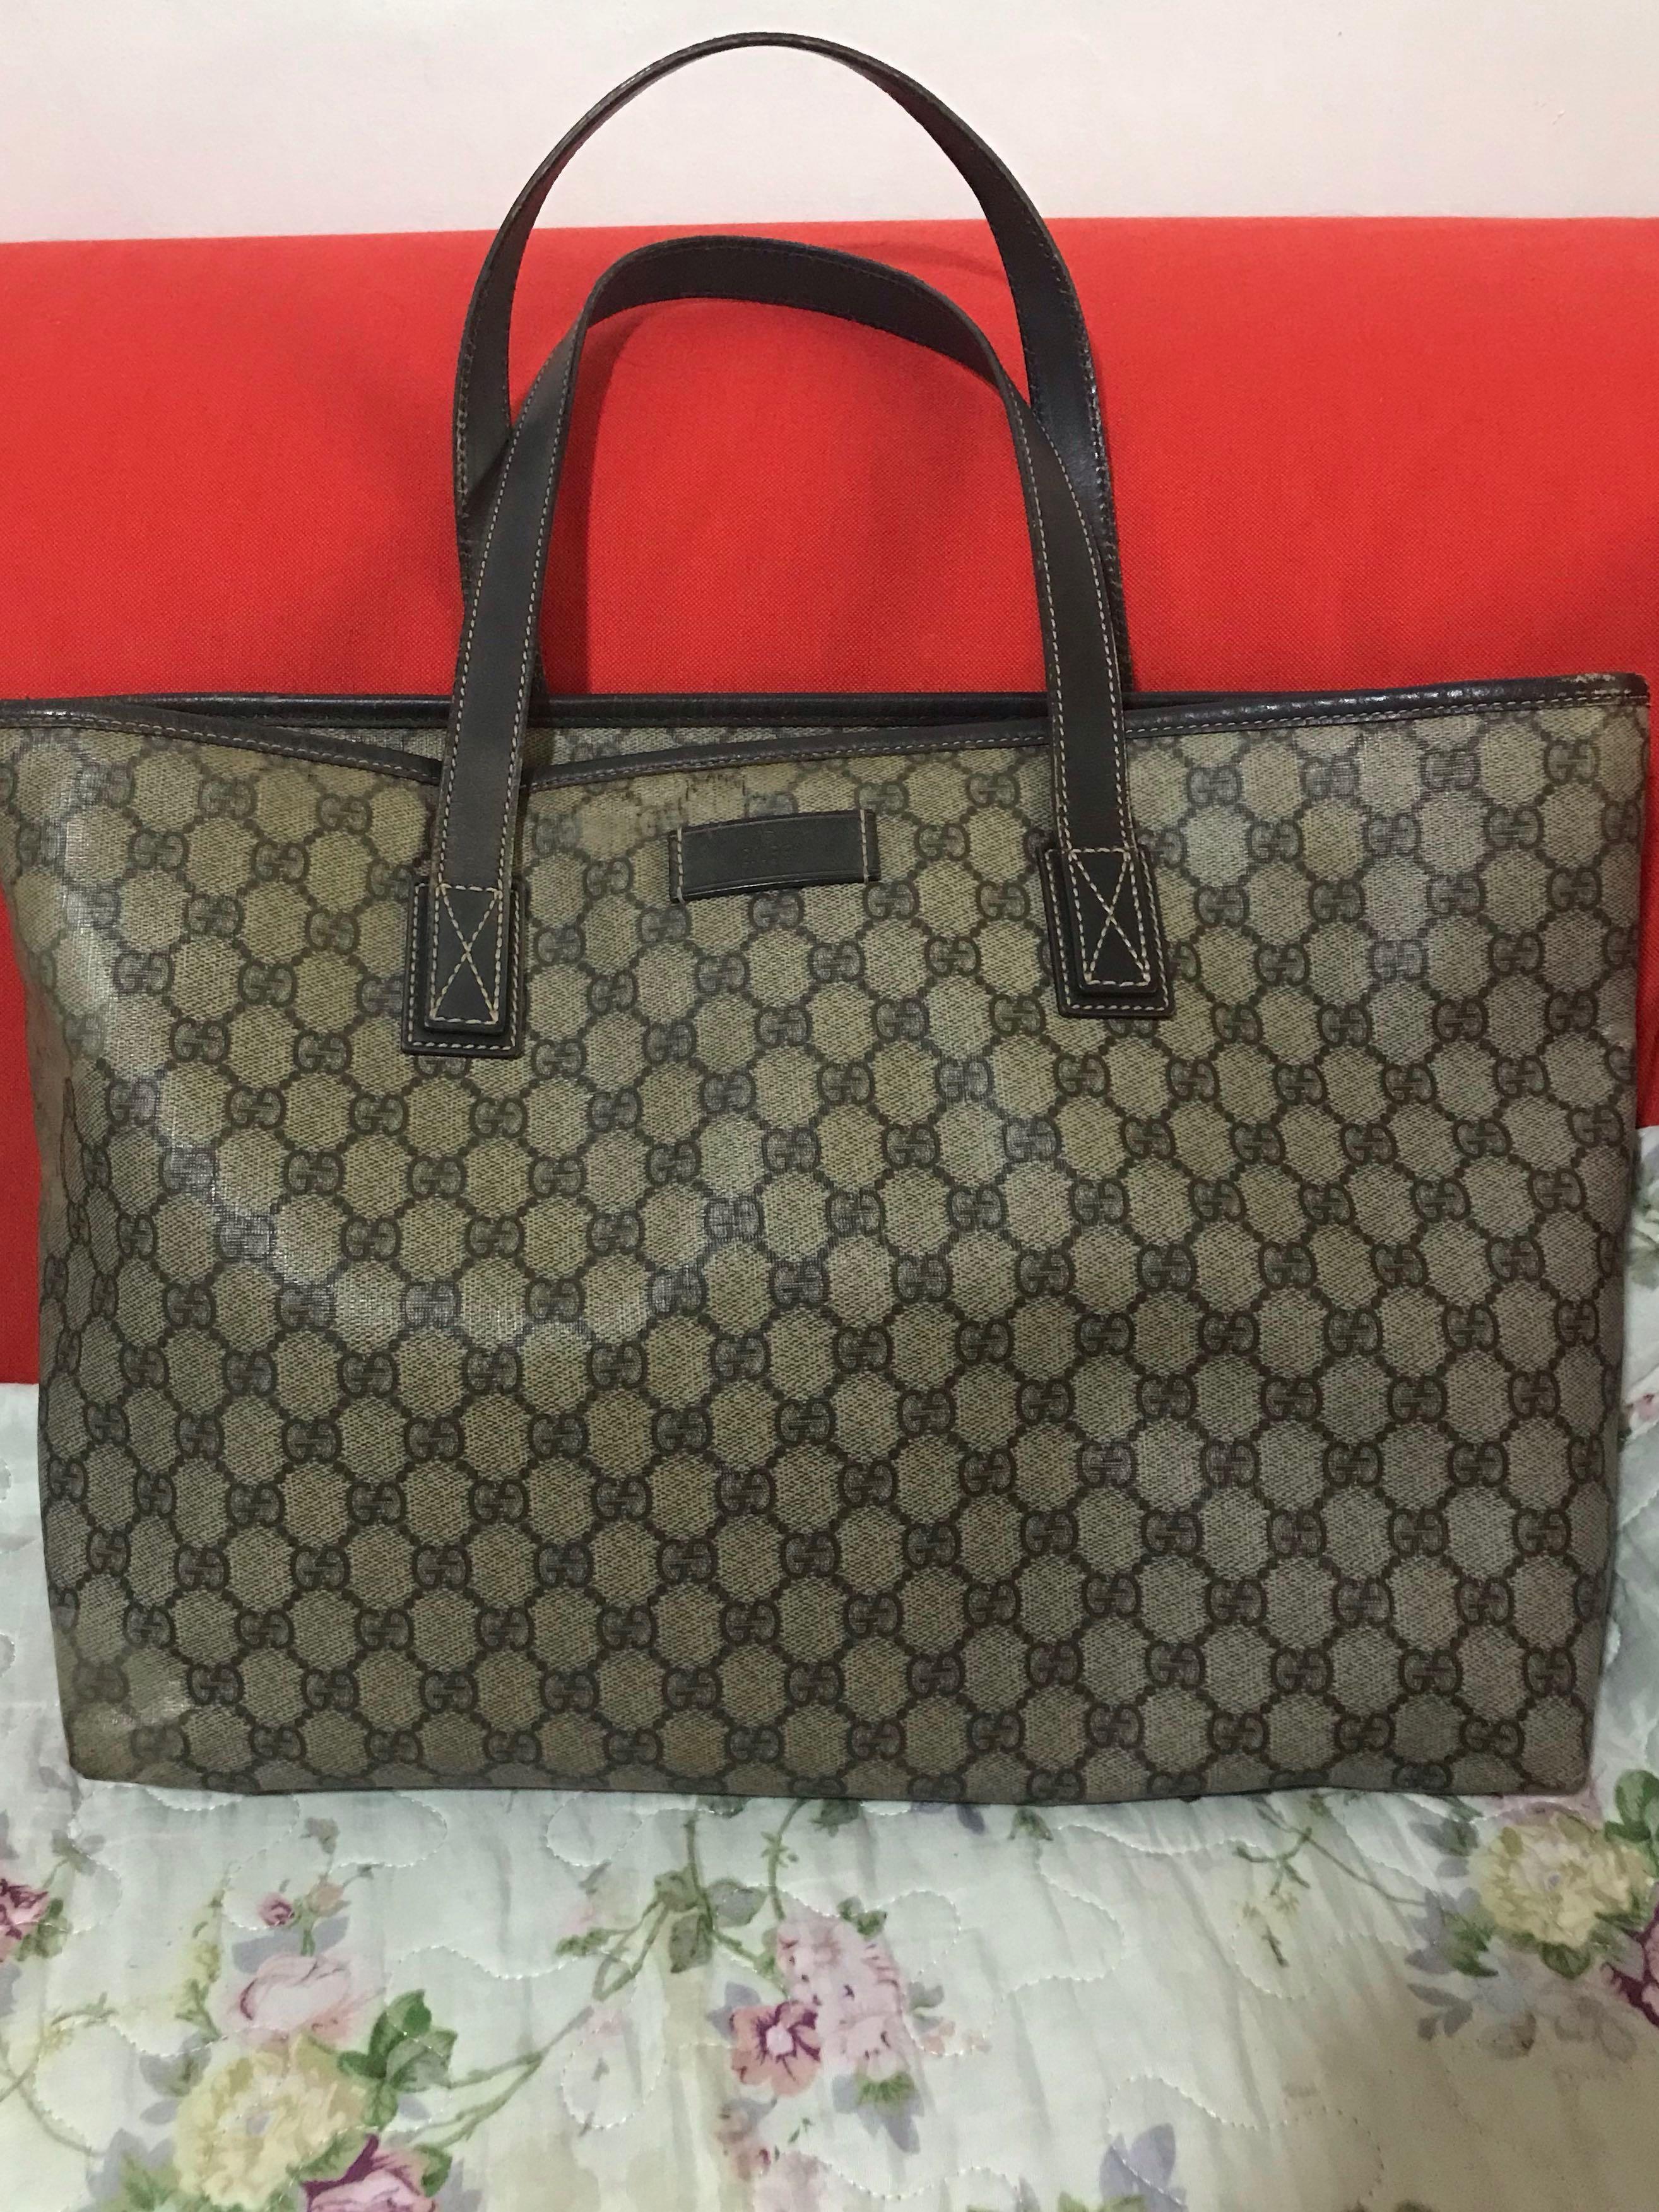 Authentic Gucci Signature Tote Bag 